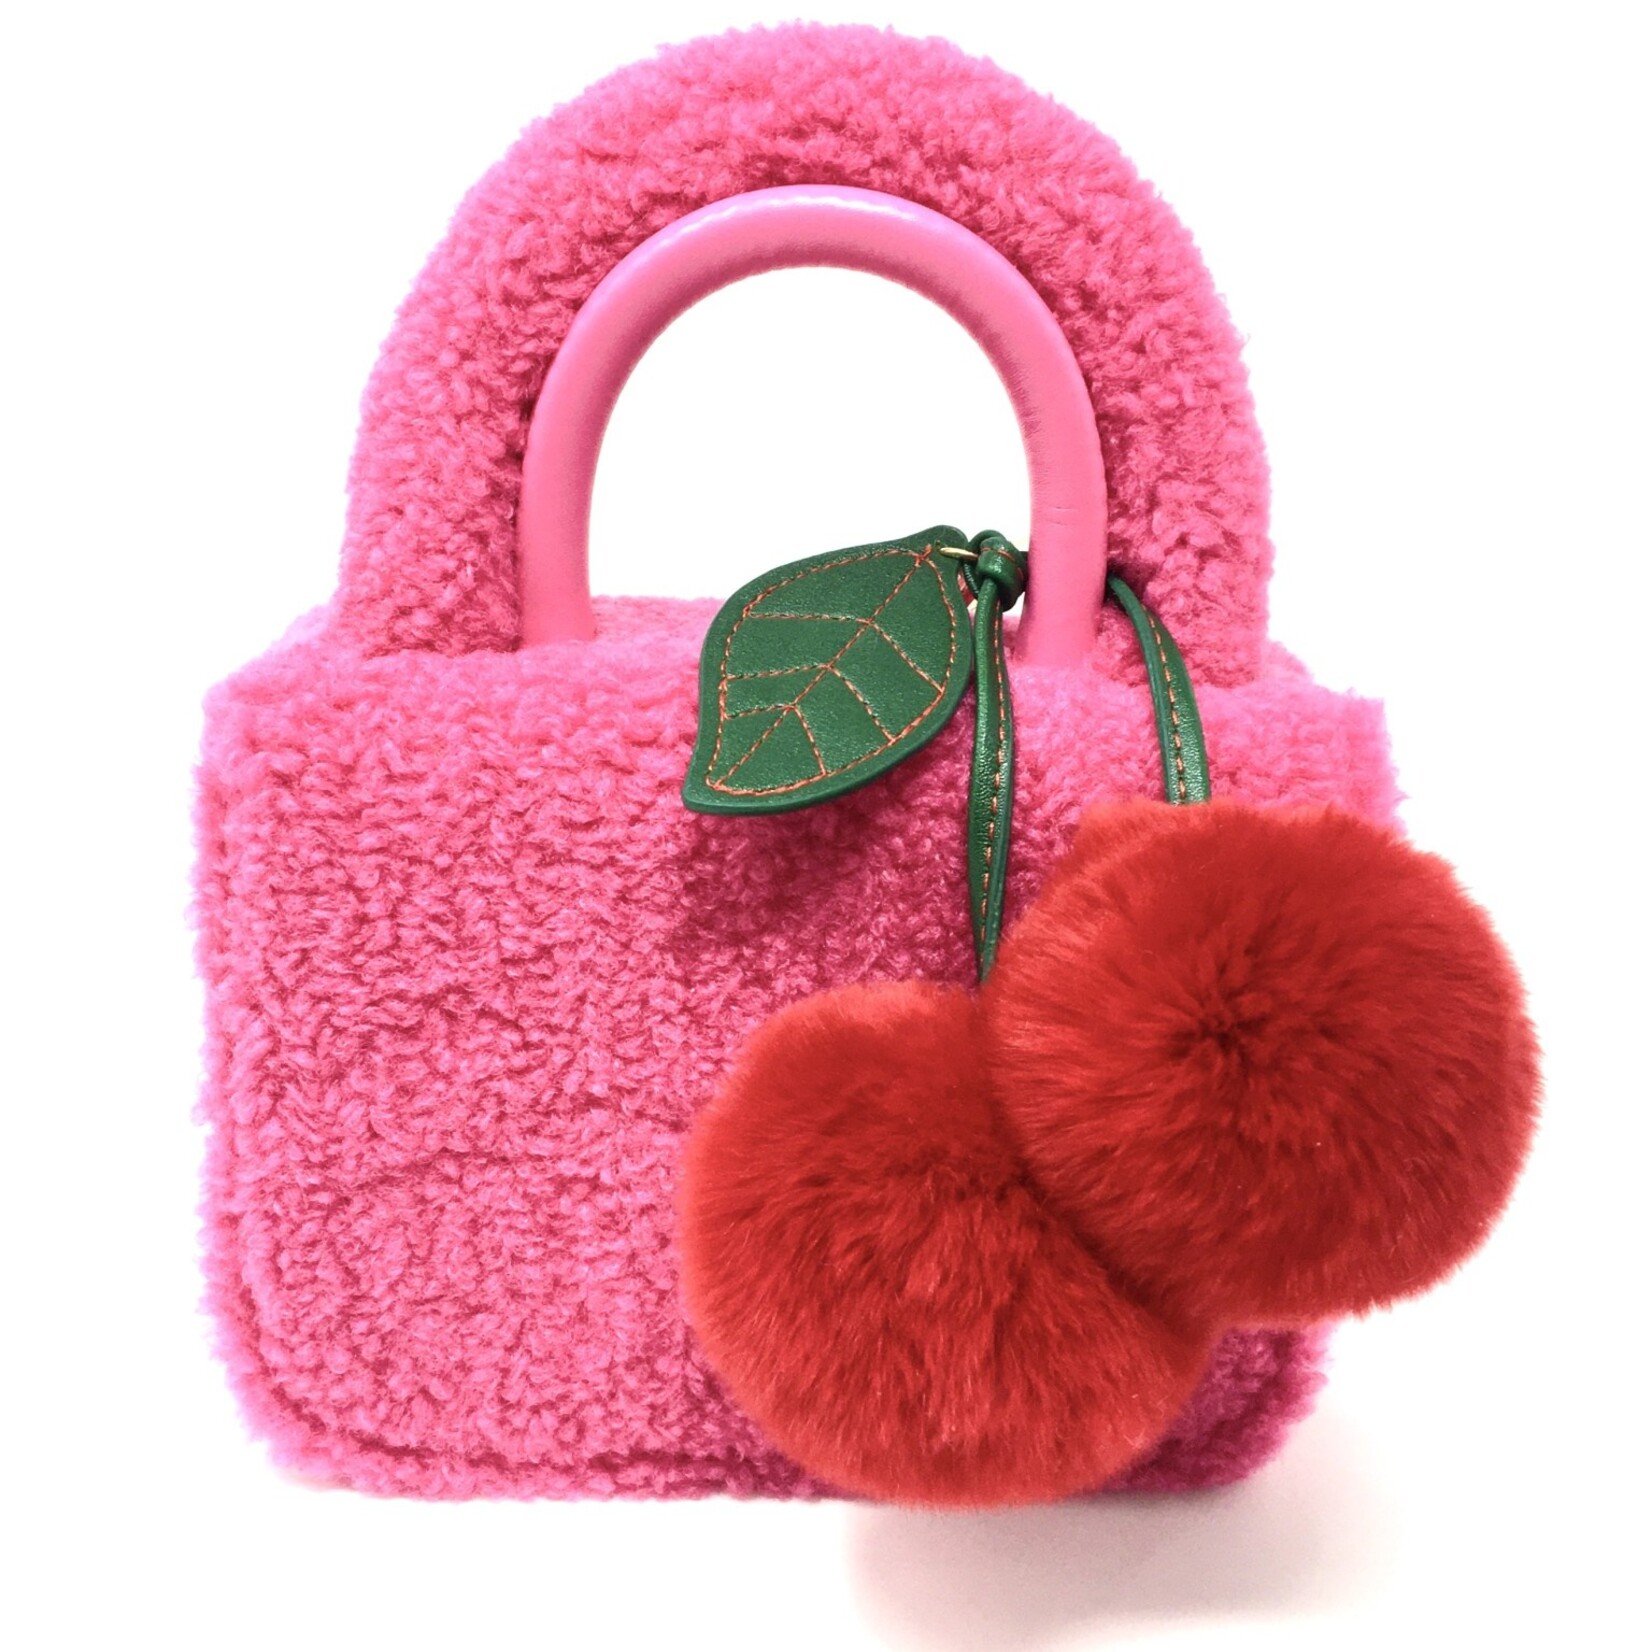 Après Babe “Cherries” Rabbit Fur Bag Charm